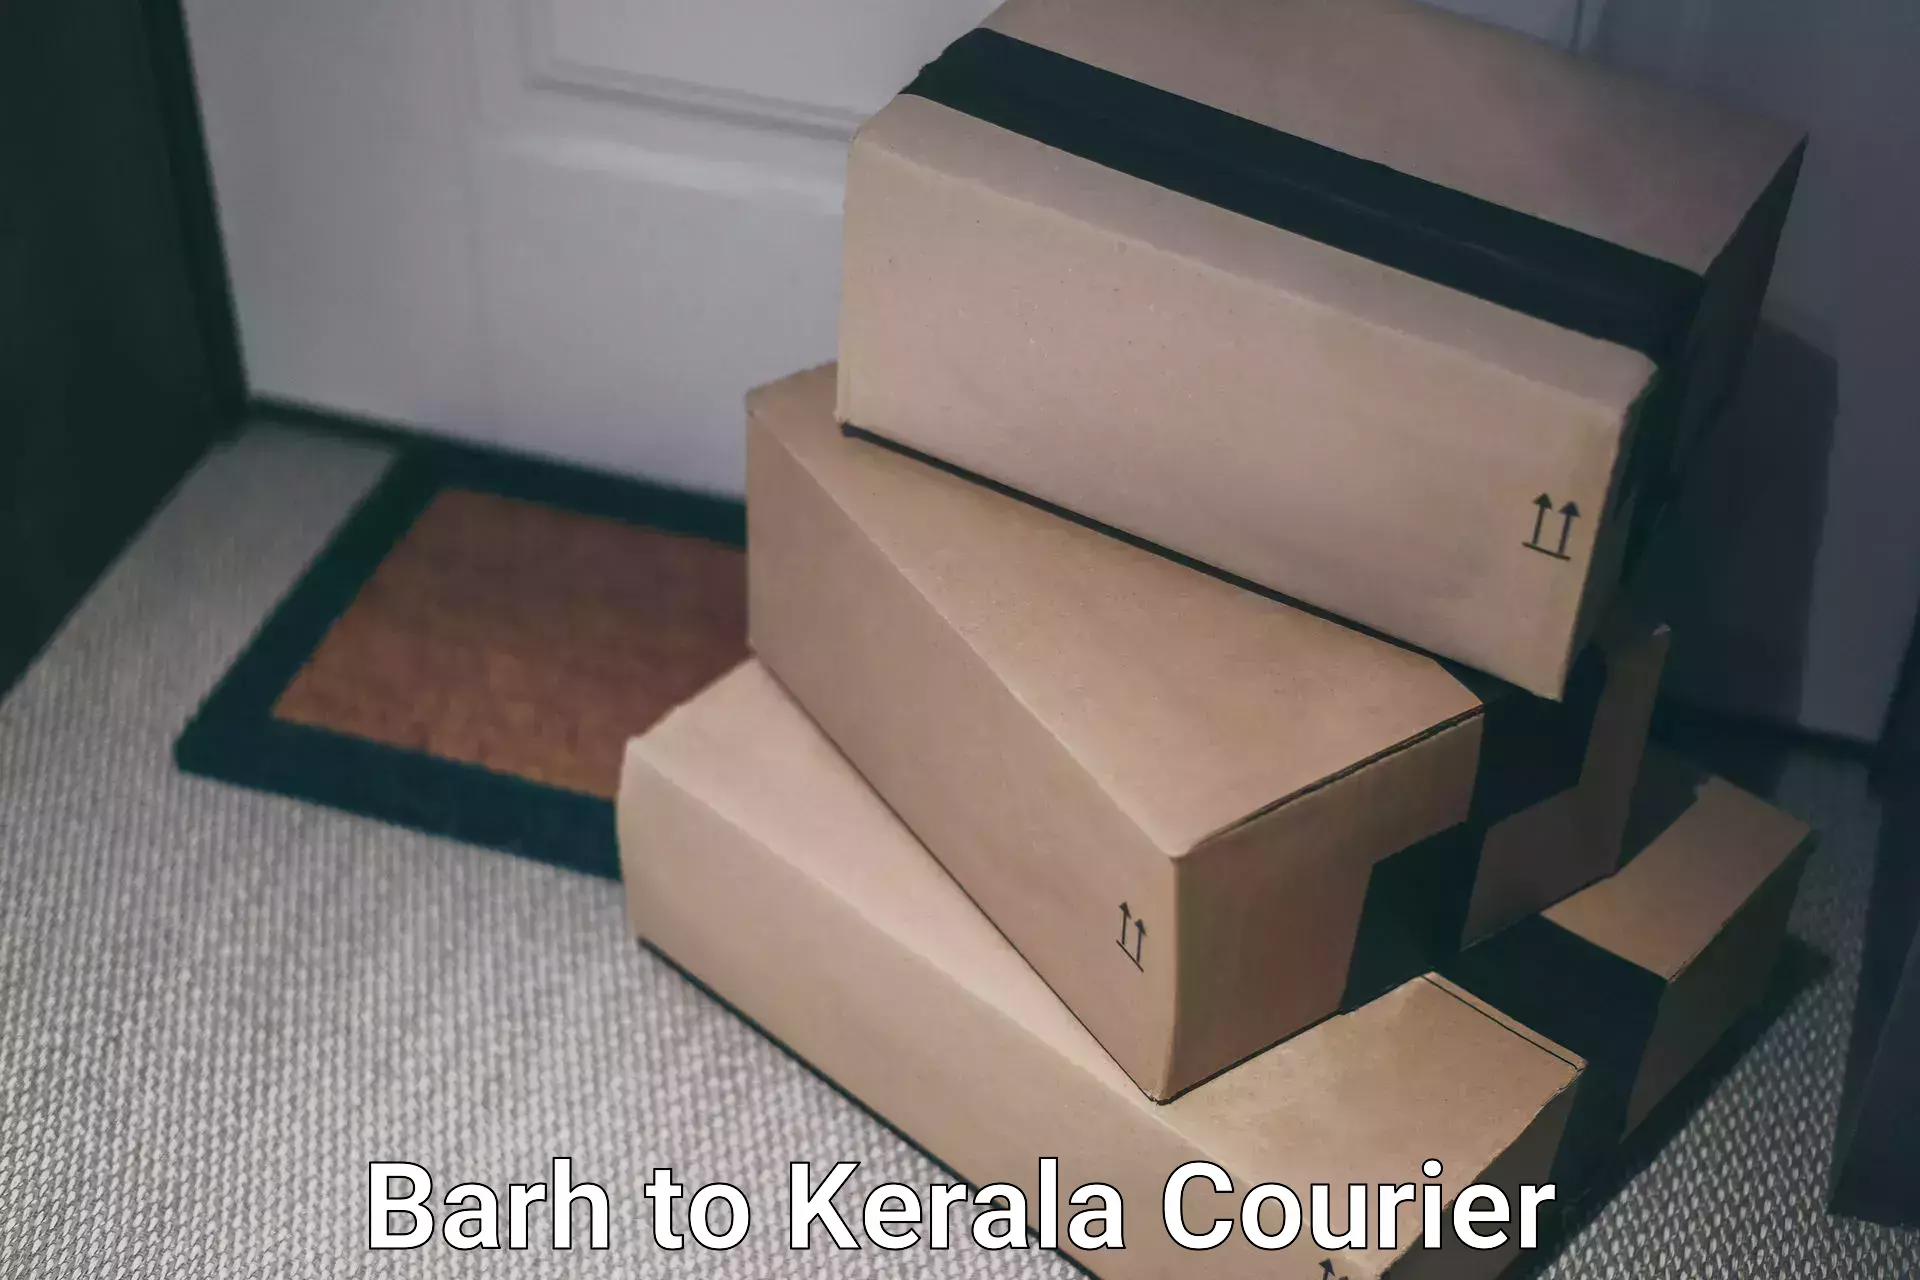 Courier service innovation Barh to Kerala